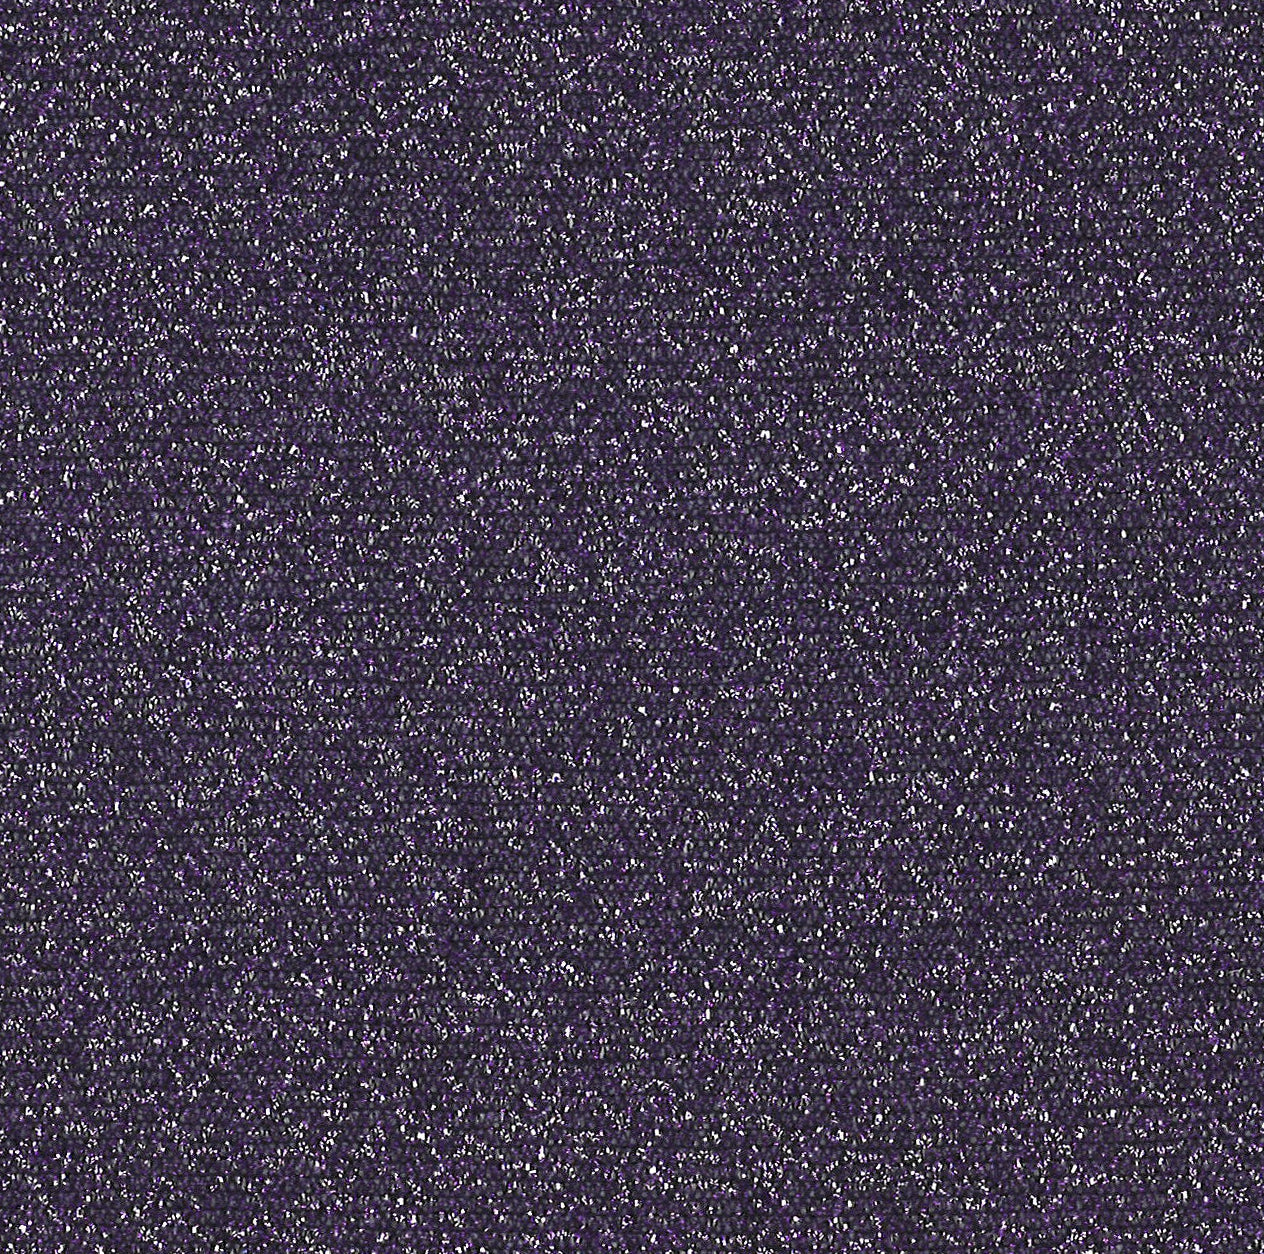 18010-03 Purple Metallic Plain Dyed Blend blend knit metallic plain dyed polyester purple Metallic, Solid Color - knit fabric - woven fabric - fabric company - fabric wholesale - fabric b2b - fabric factory - high quality fabric - hong kong fabric - fabric hk - acetate fabric - cotton fabric - linen fabric - metallic fabric - nylon fabric - polyester fabric - spandex fabric - chun wing hing - cwh hk - fabric worldwide ship - 針織布 - 梳織布 - 布料公司- 布料批發 - 香港布料 - 秦榮興